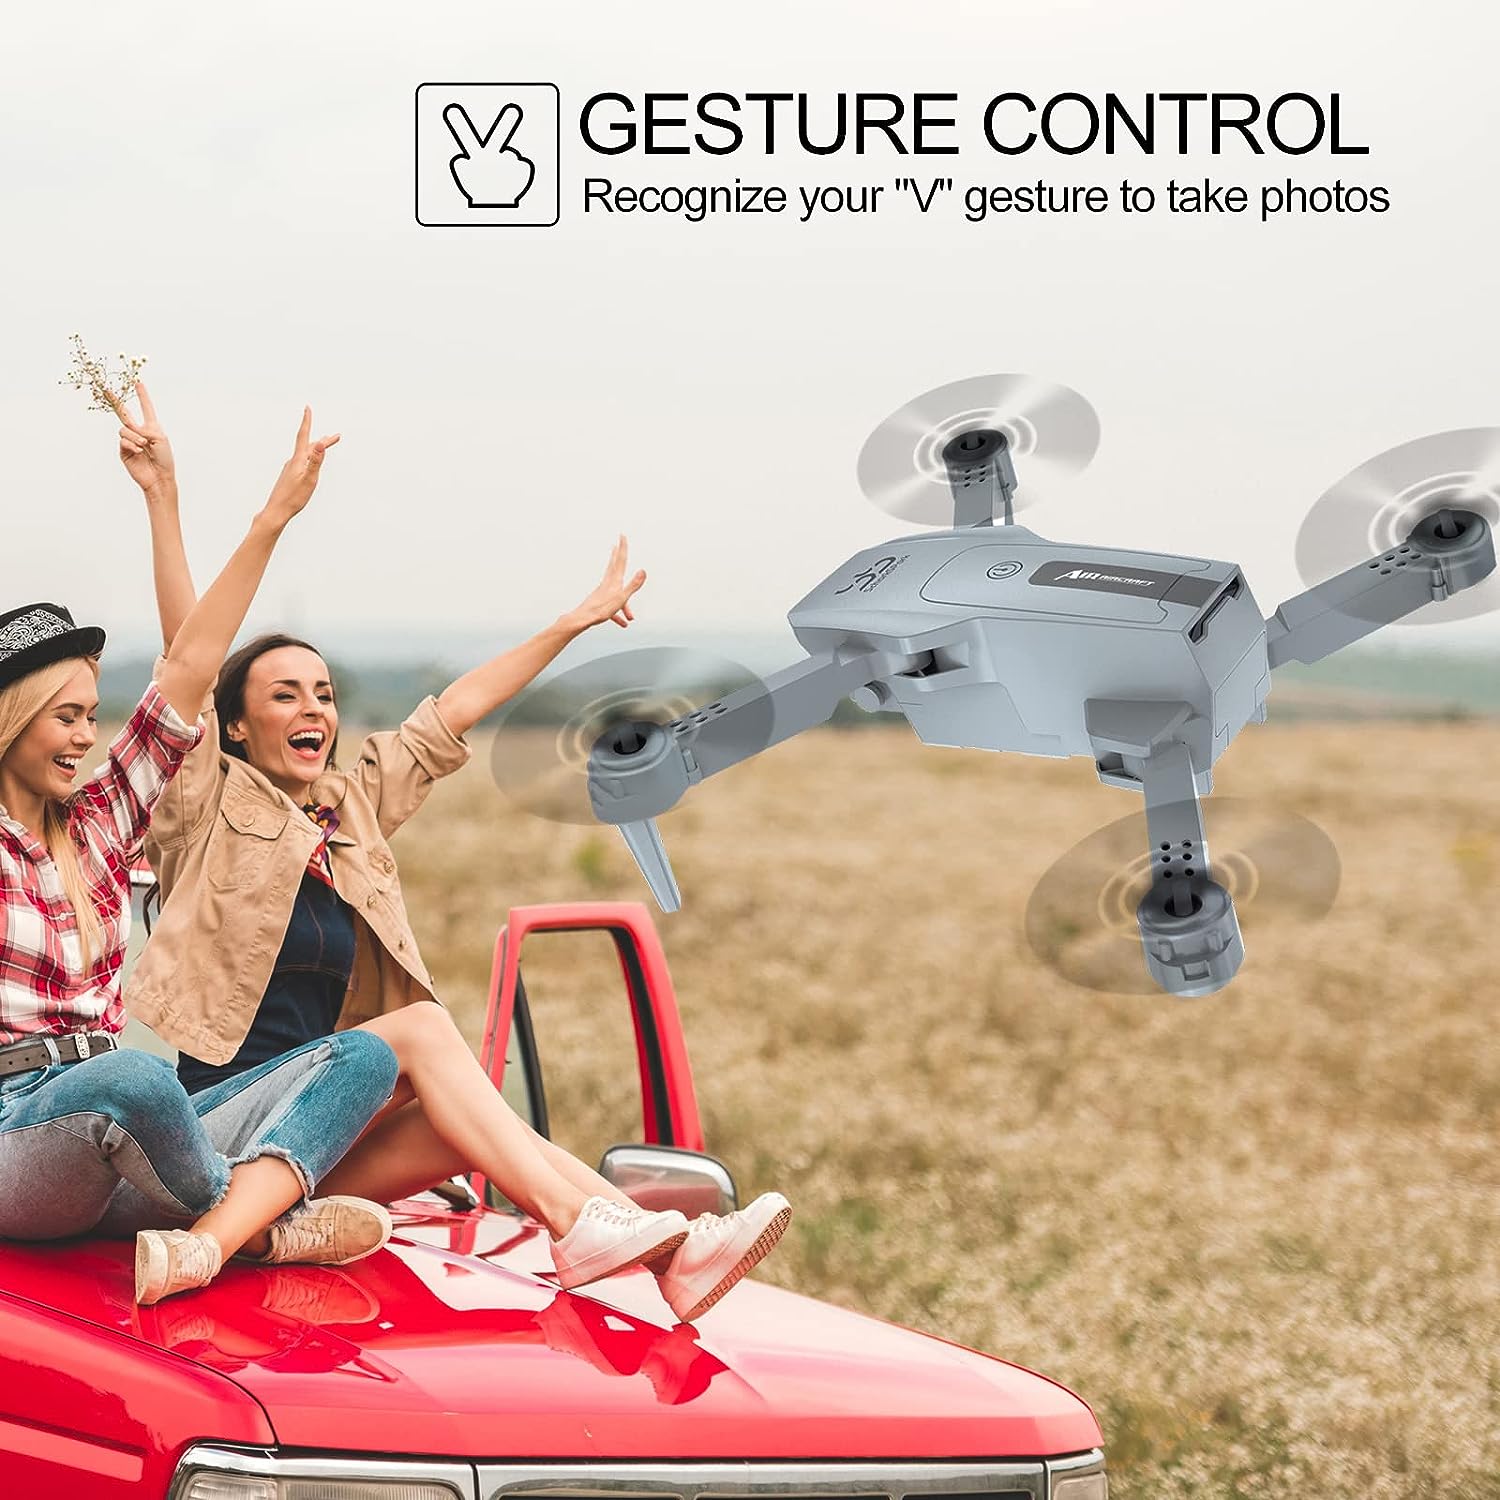 ScharkSpark Drone - gesture control